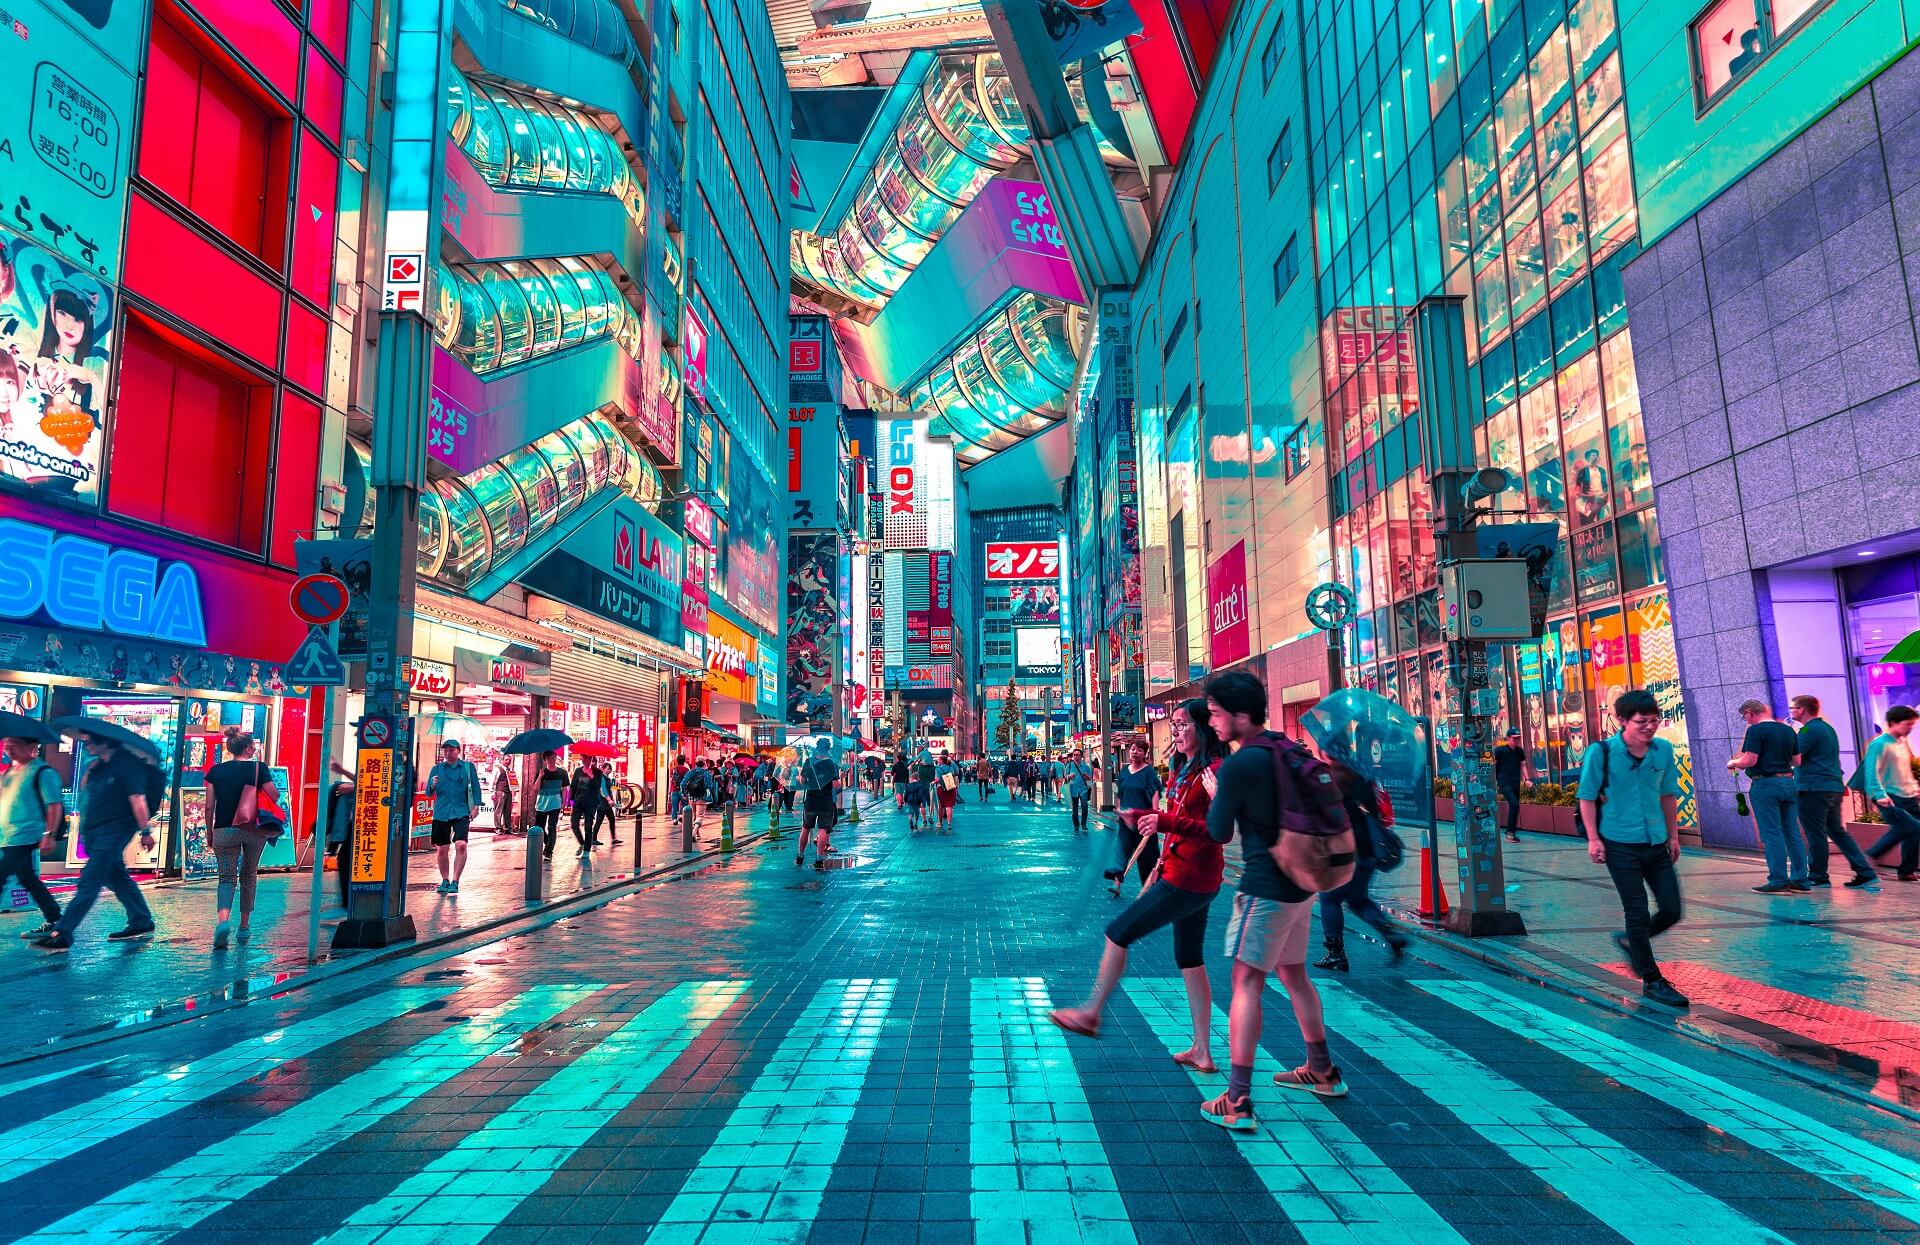 Shopping street in Japan